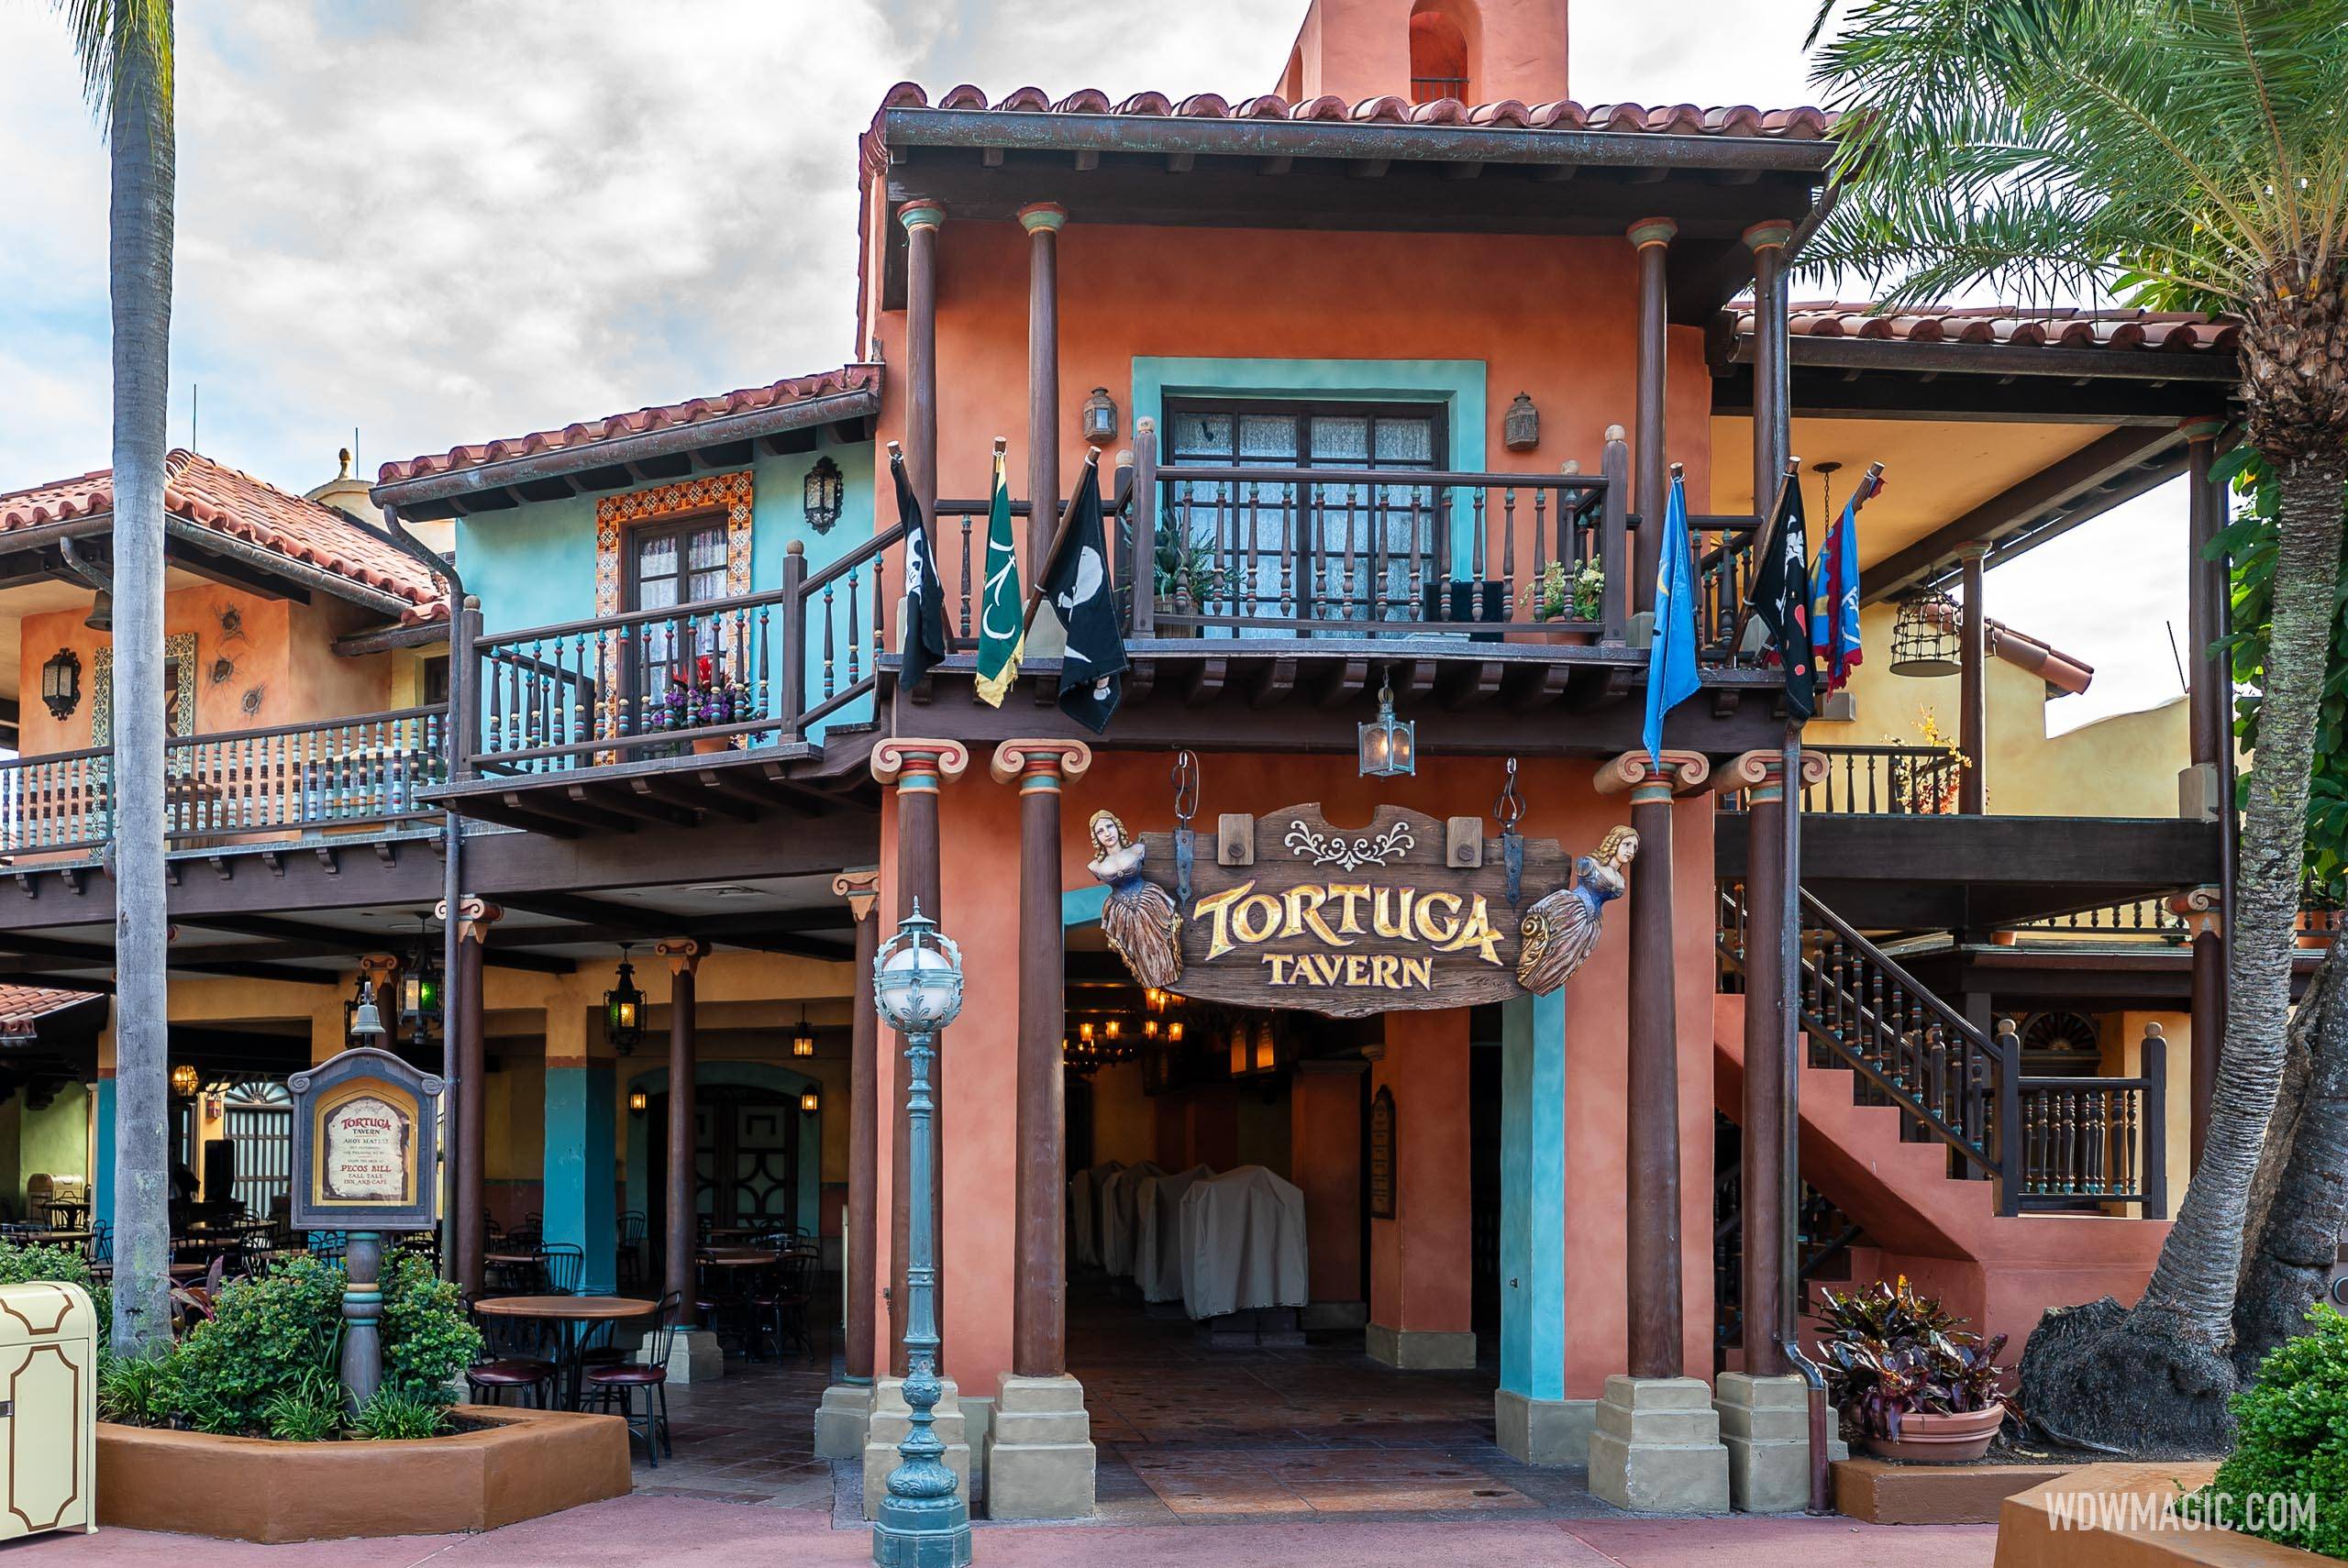 Disney World's Tortuga Tavern Becomes Tortuga Treasures Amid Pirates of the Caribbean Updates